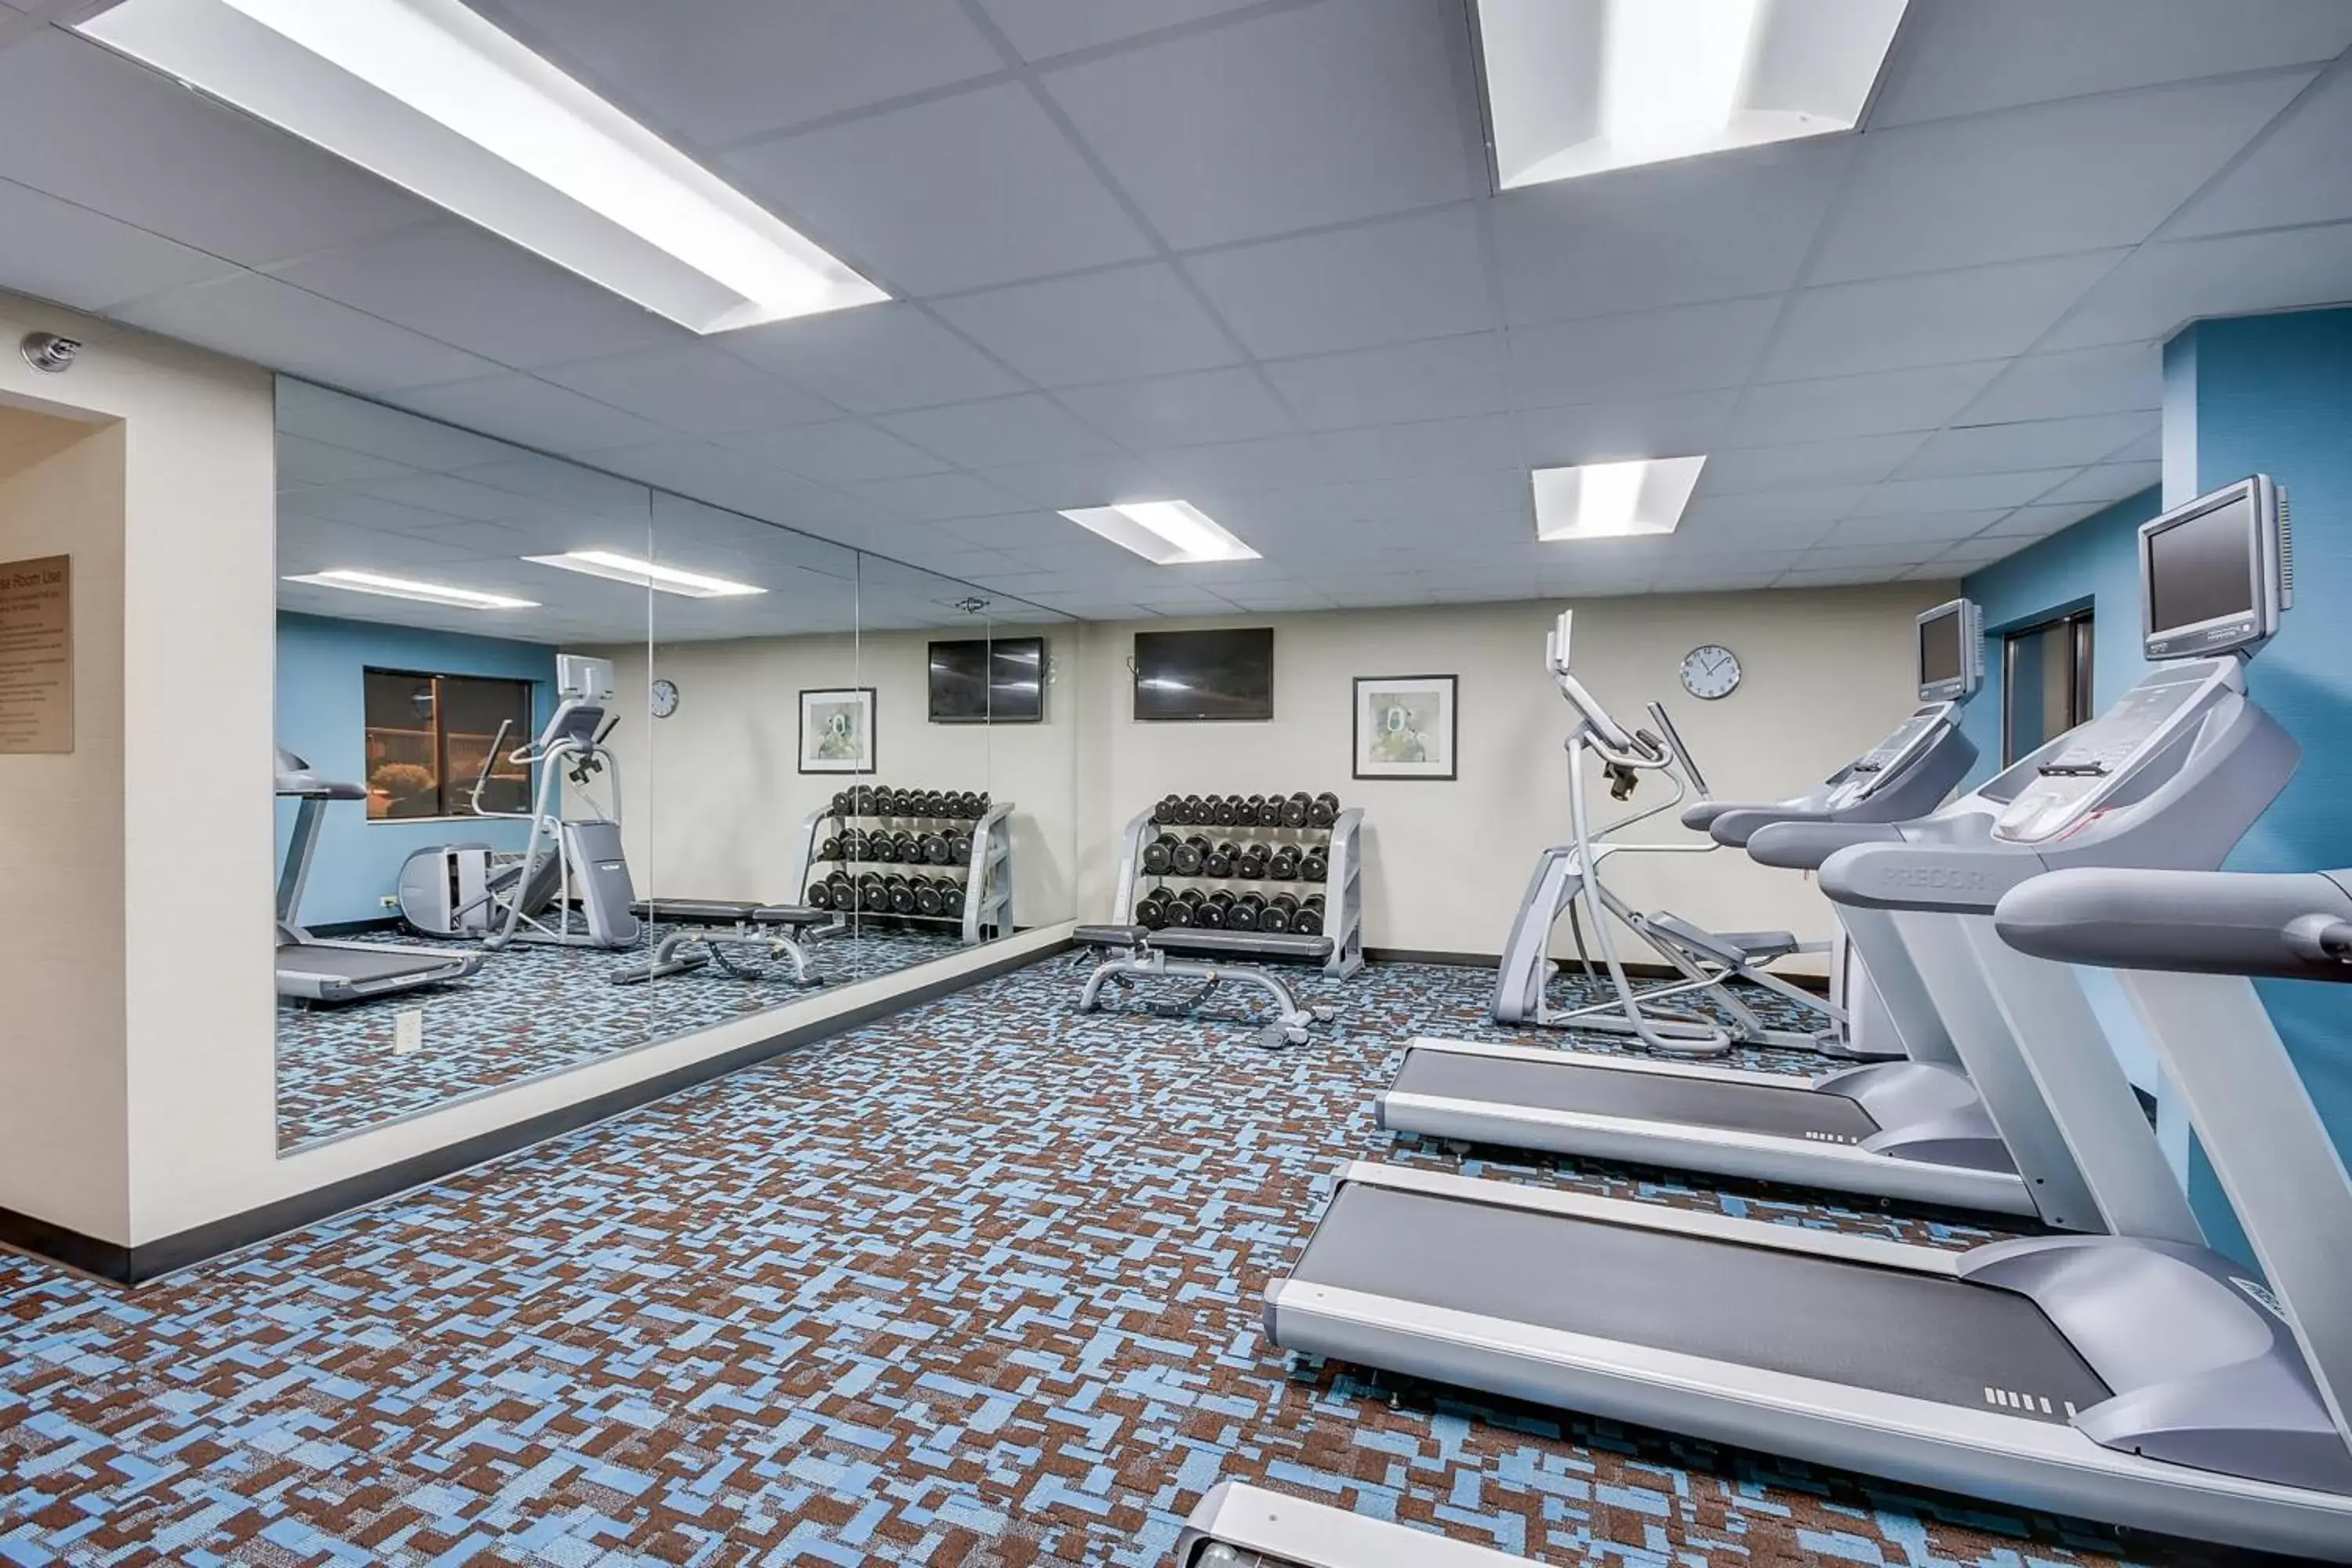 Fitness centre/facilities, Fitness Center/Facilities in Fairfield Inn Boston Tewksbury/Andover